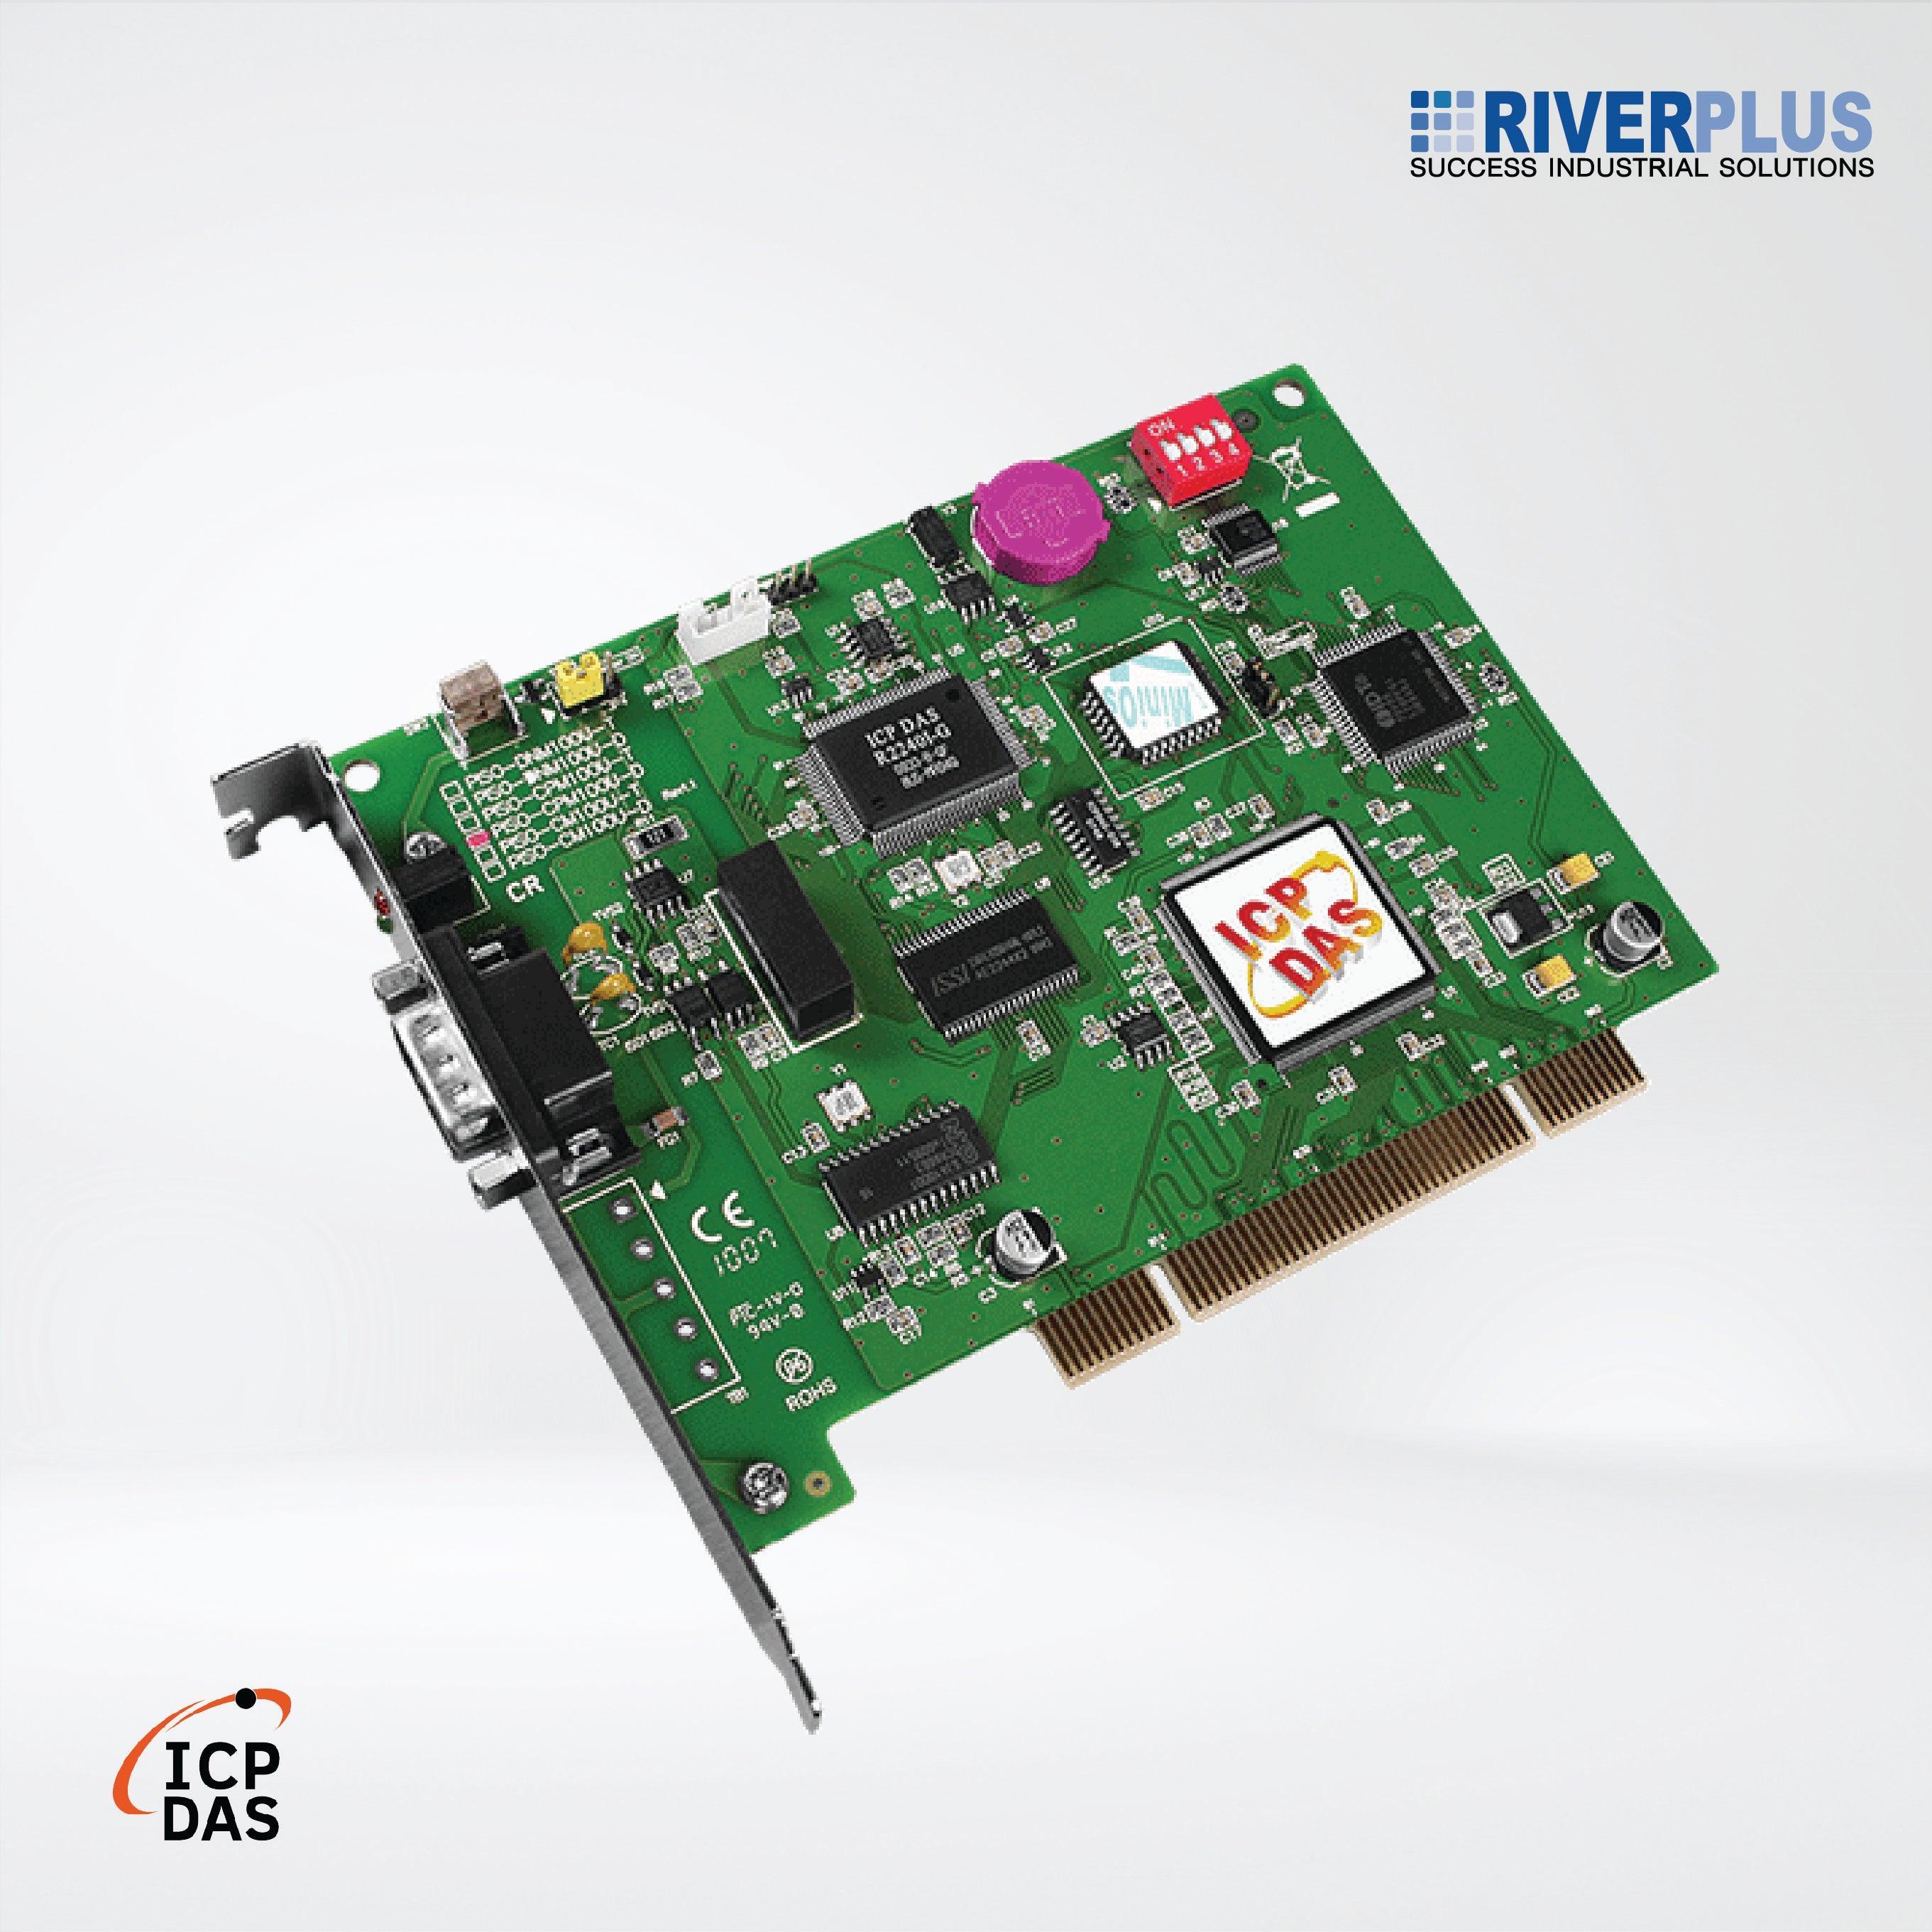 PISO-CPM100U-D 1 Port Intelligent CANopen Master Universal PCI Board - Riverplus